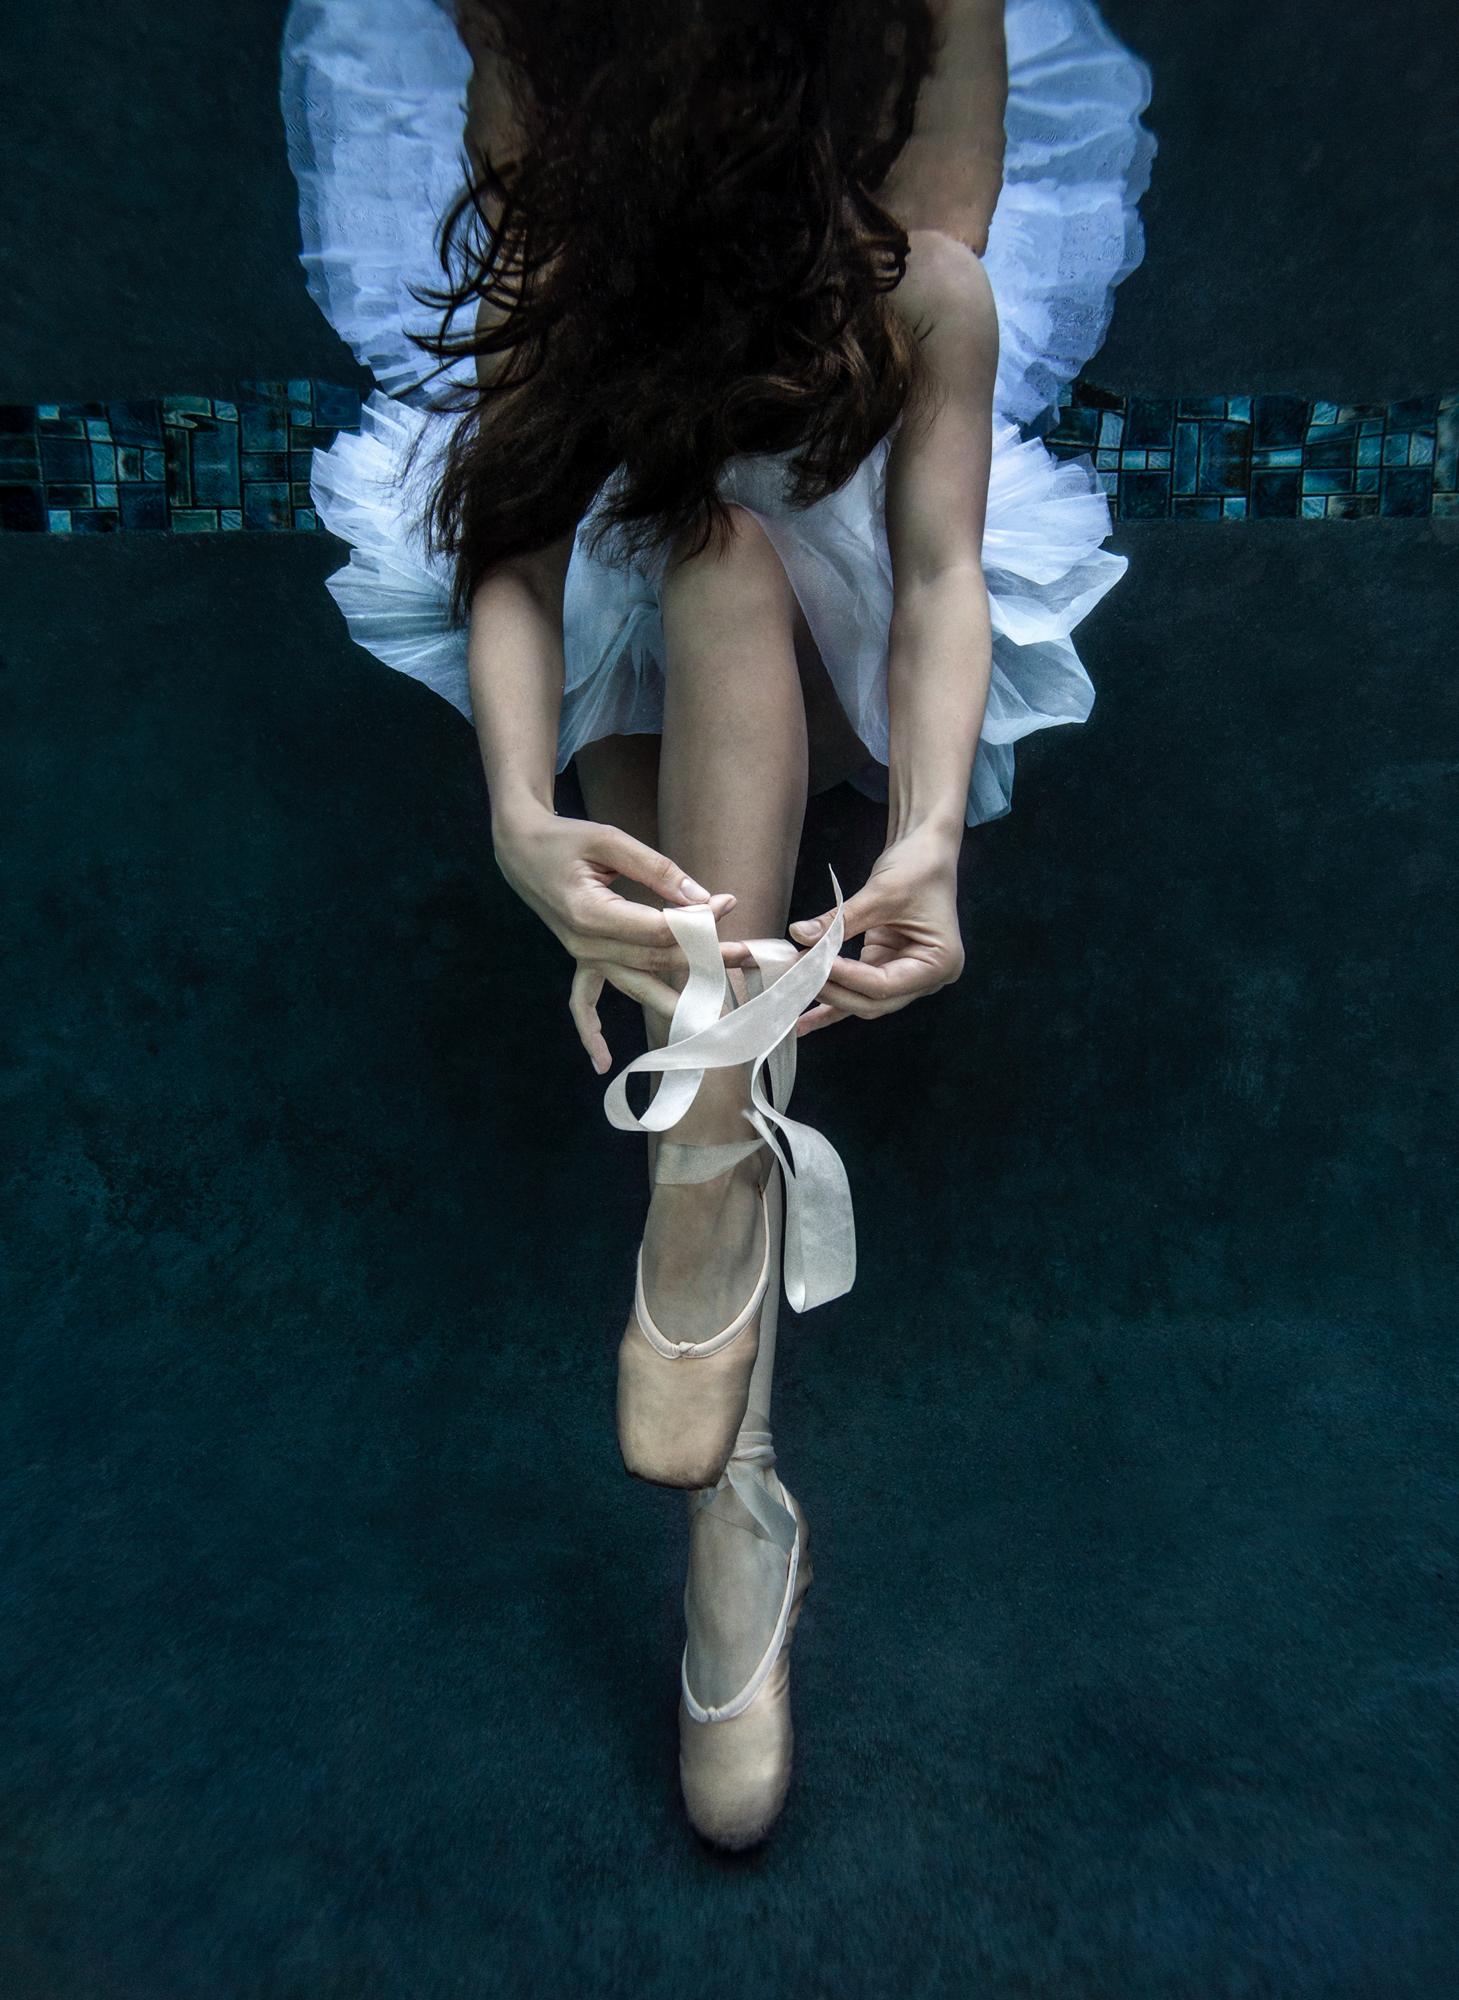 Alex Sher Figurative Photograph - Pointe - underwater photograph - archival pigment print 59x43"